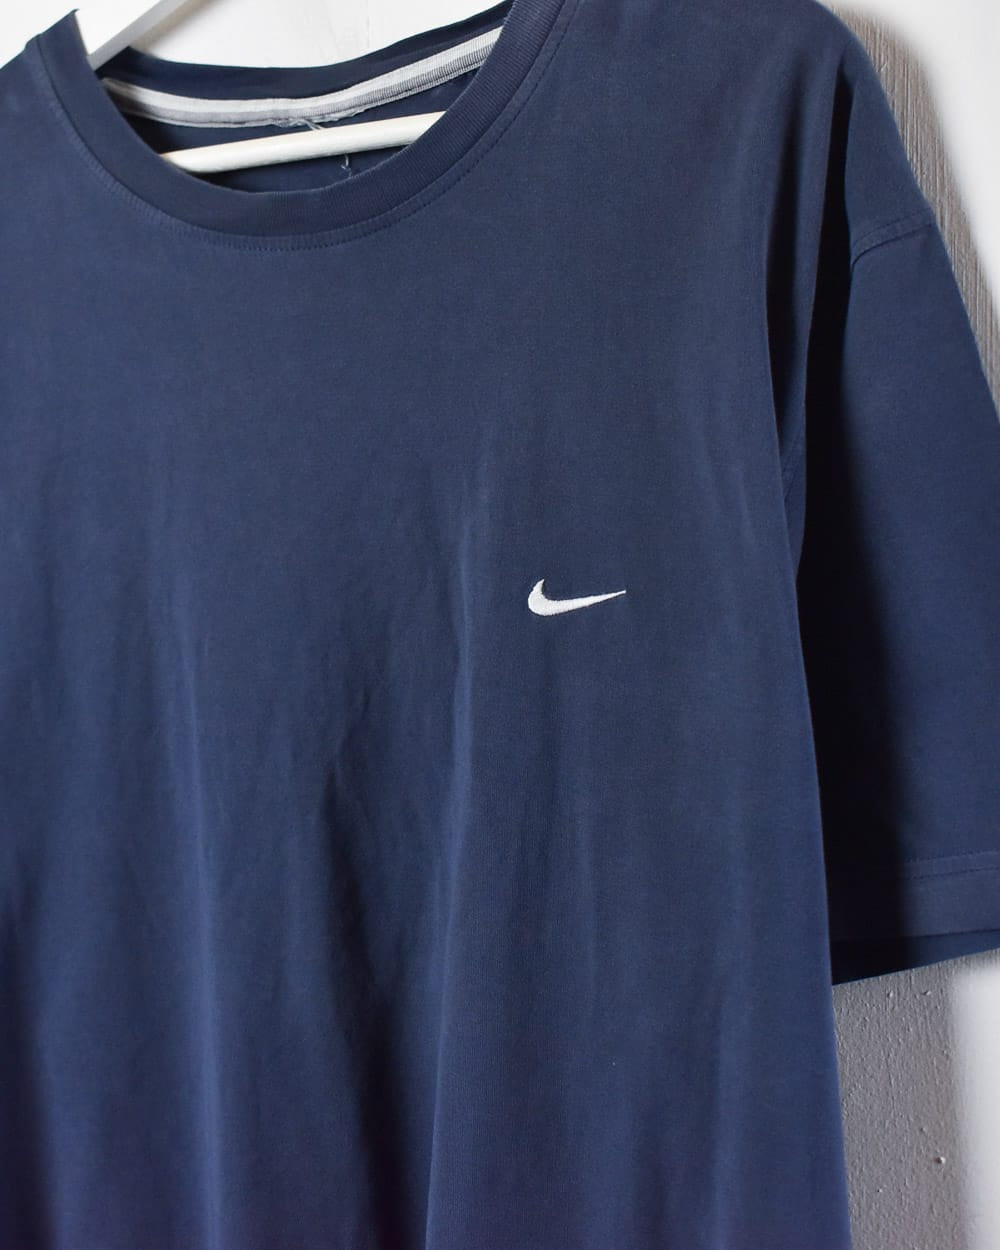 Navy Nike T-Shirt - X-Large